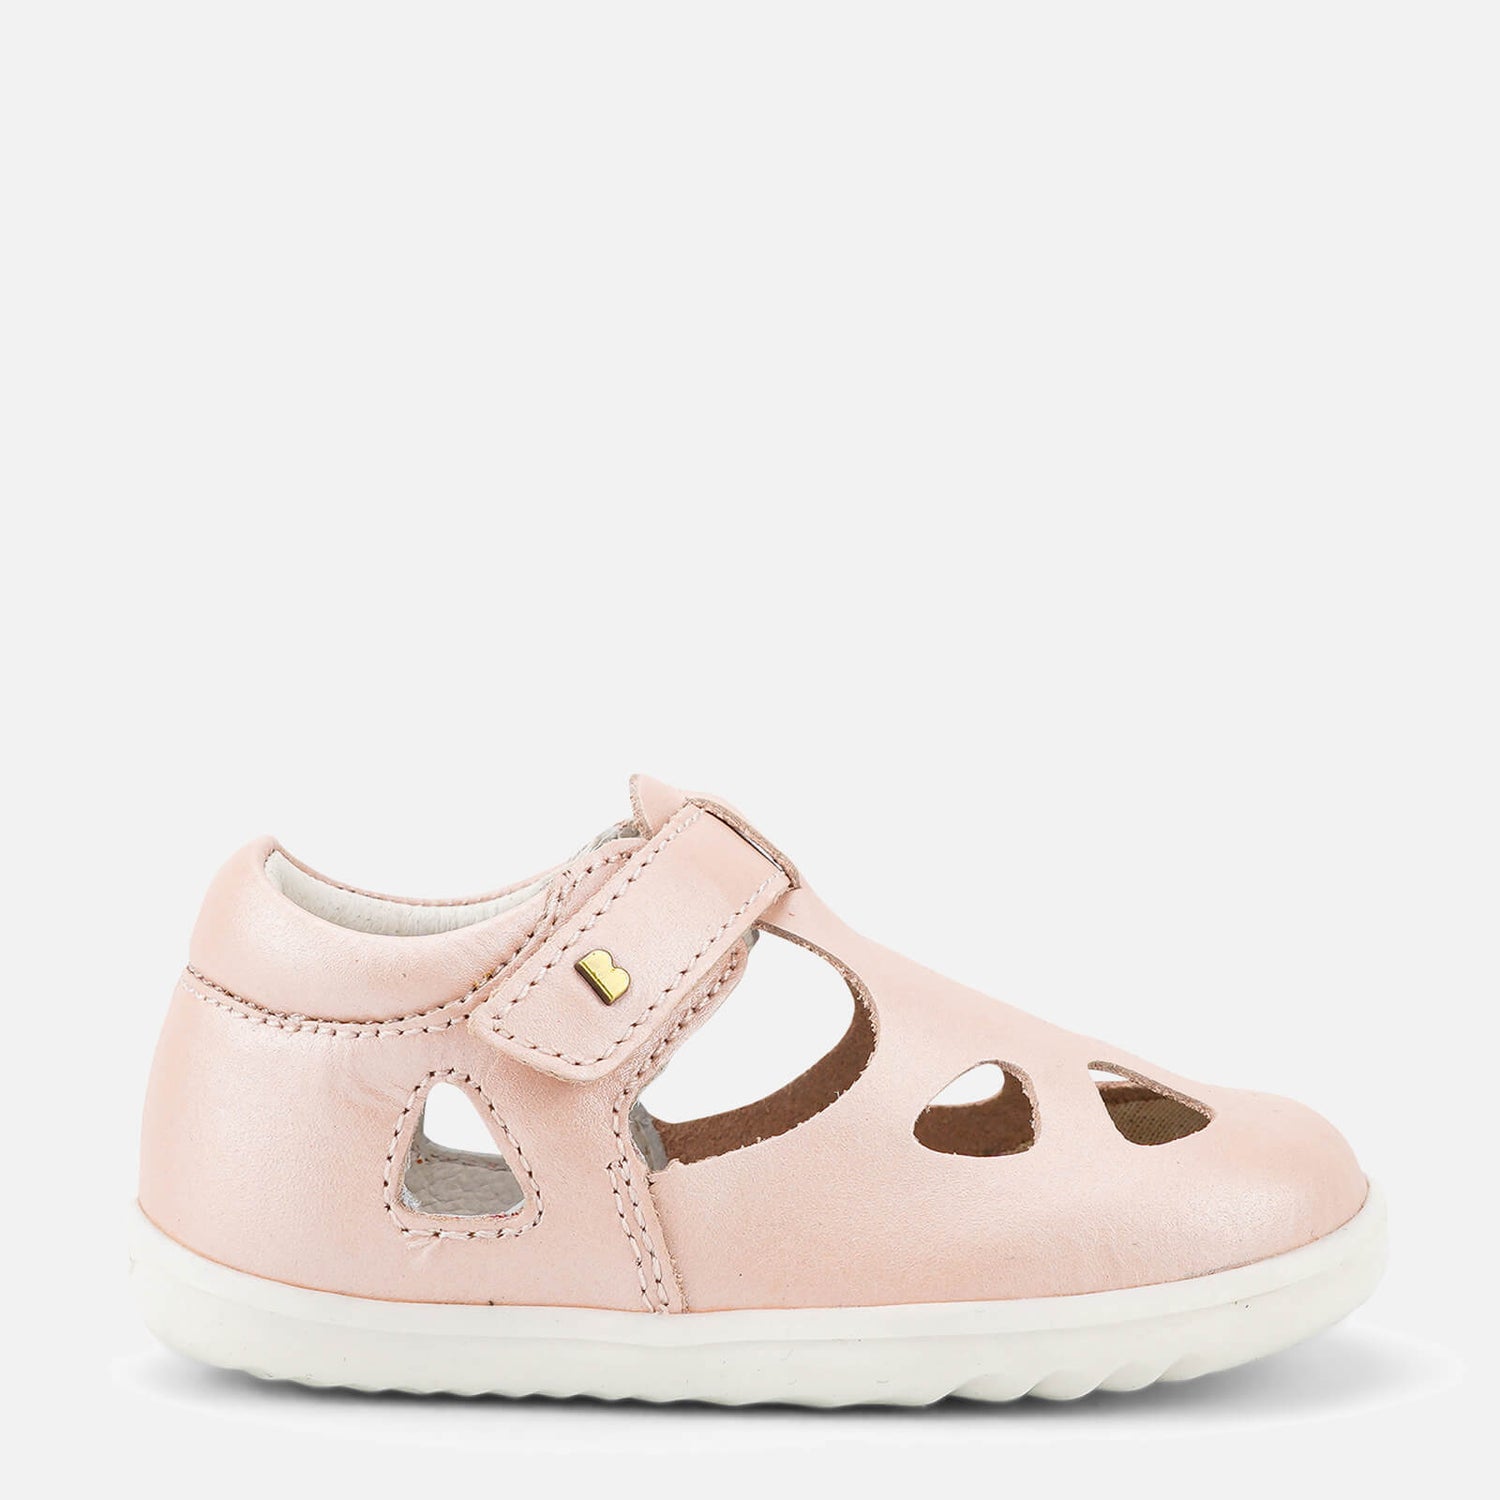 Bobux Girls' Step Up Zap II Sandals - Seashell Shimmer - UK 5 Toddler